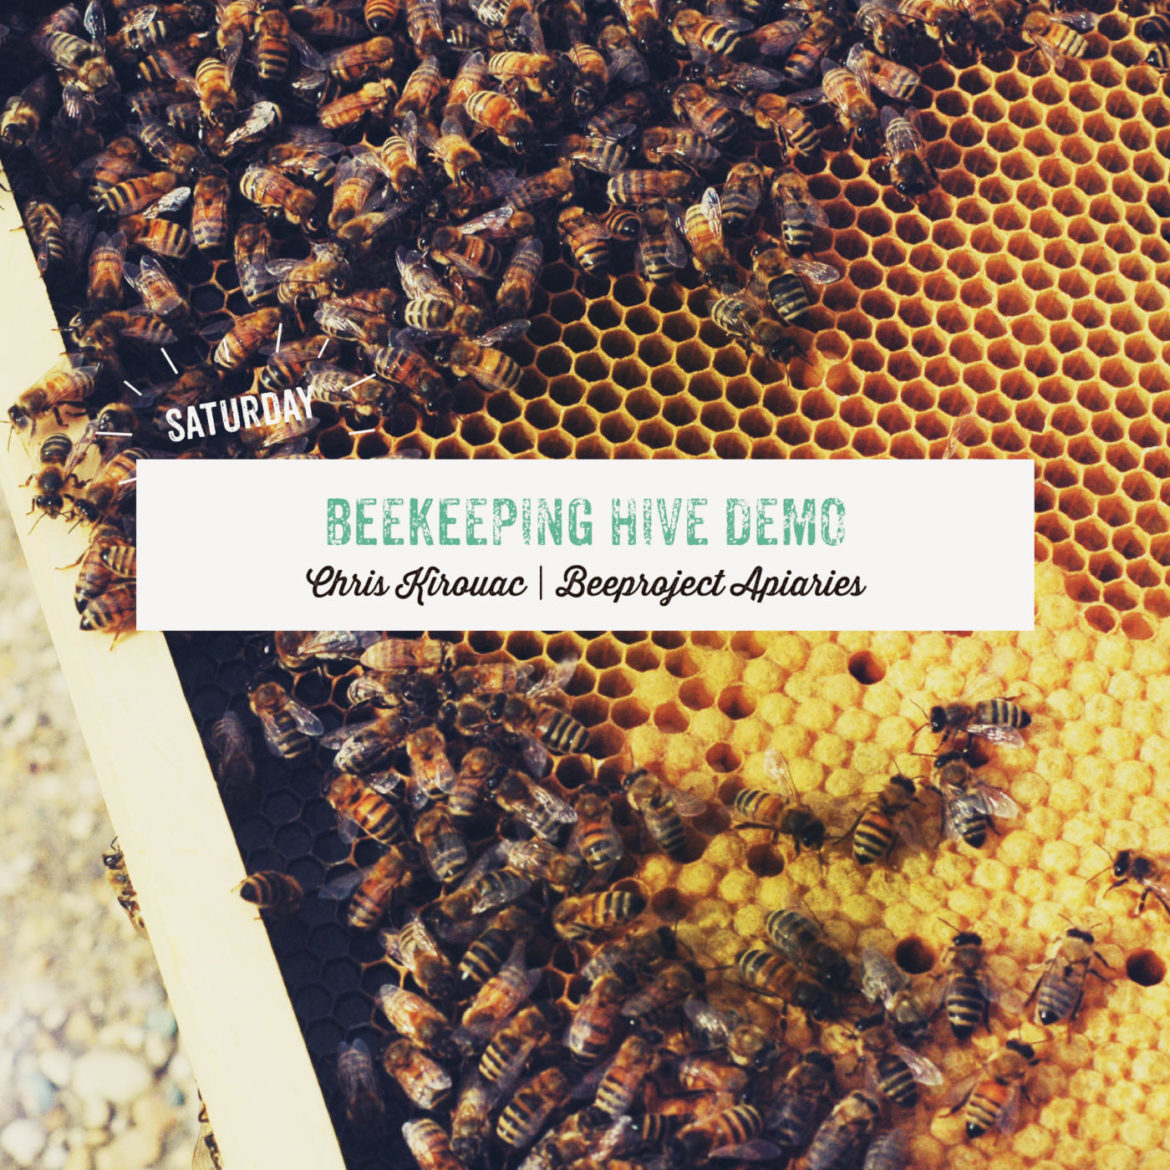 Beekeeping Hive Demo